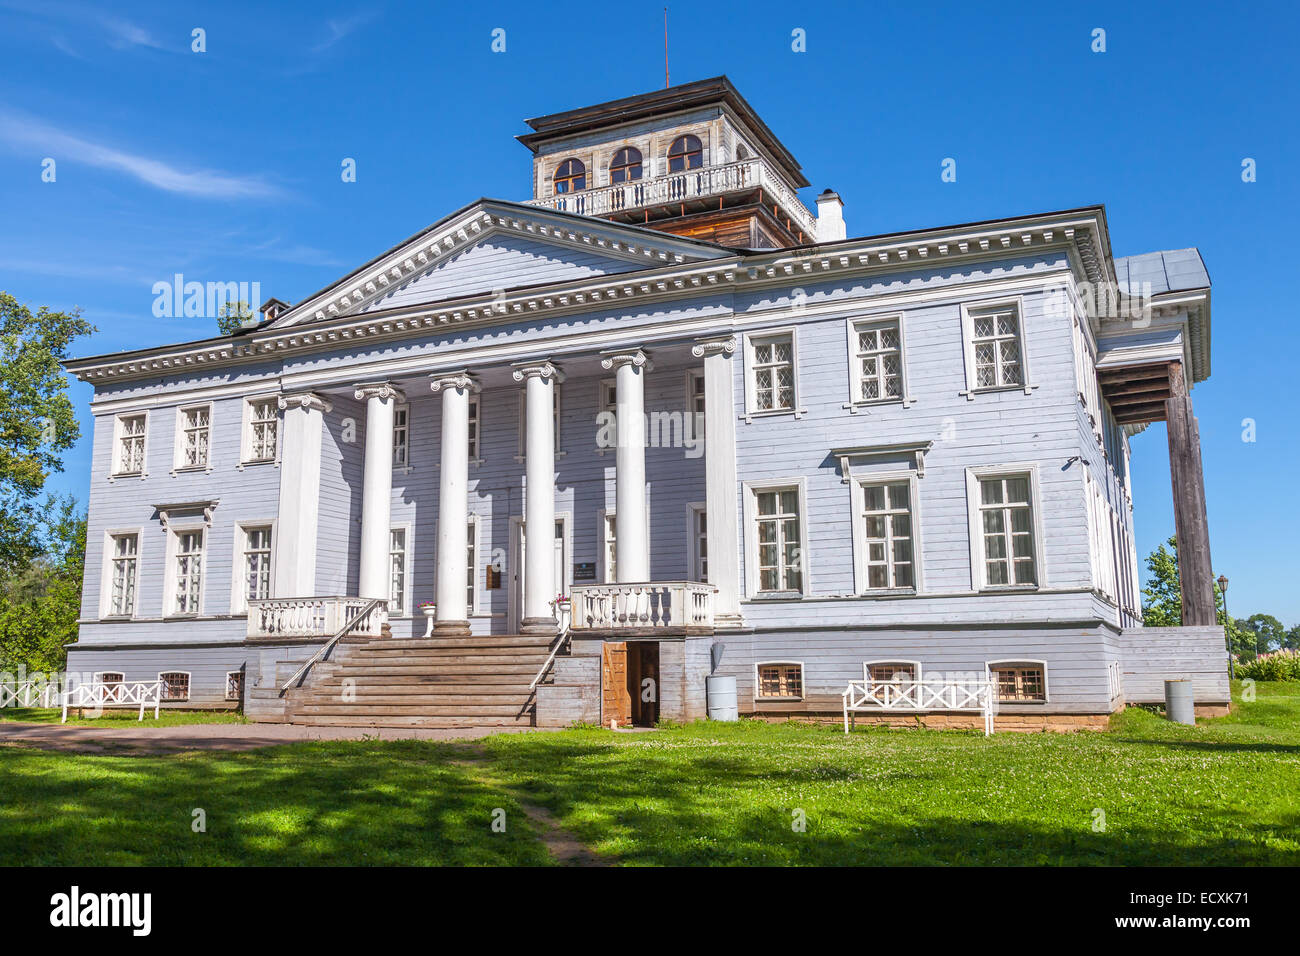 Weihnachten, Russland - 7. Juli 2014: Weihnachten Memorial Anwesens. Fassade des Museums in Leningrad Oblast, Russland. Stockfoto